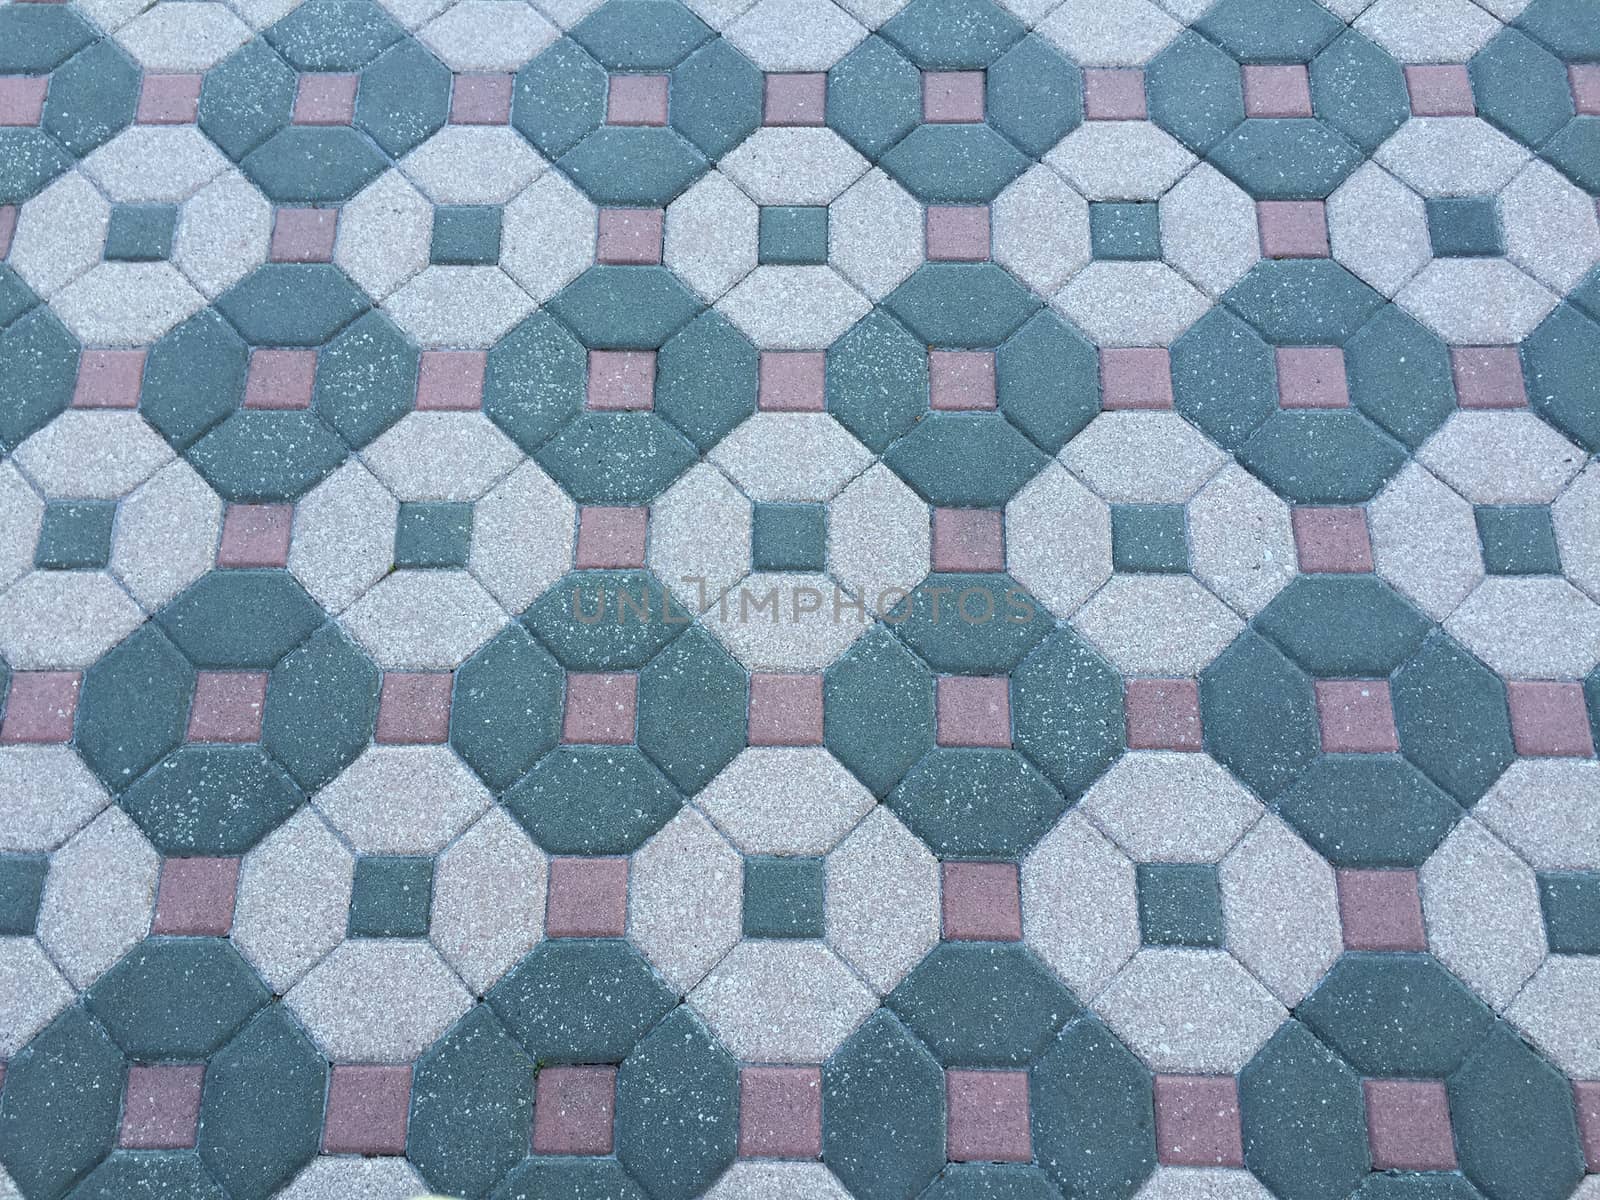 A design of bricks on the ground